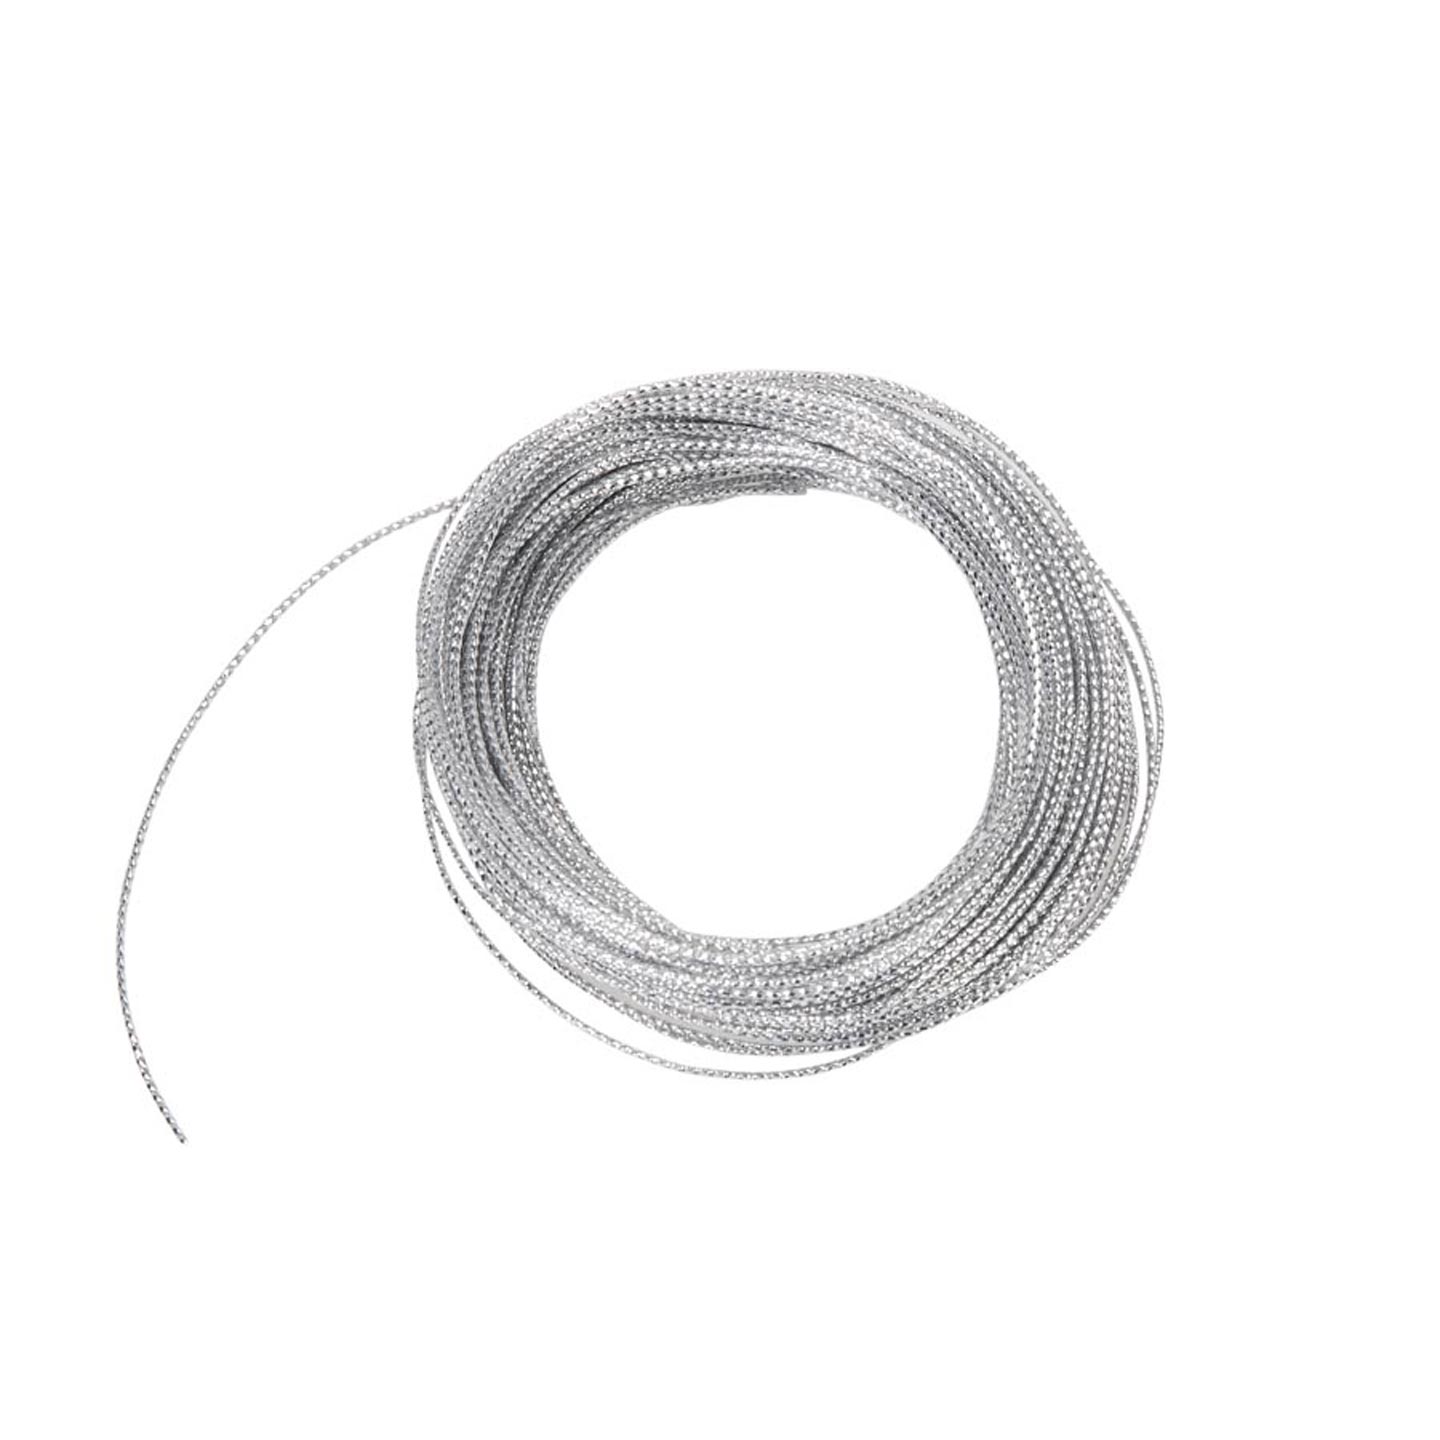 Ribbon wire - Bow Wire - Metallic Wire